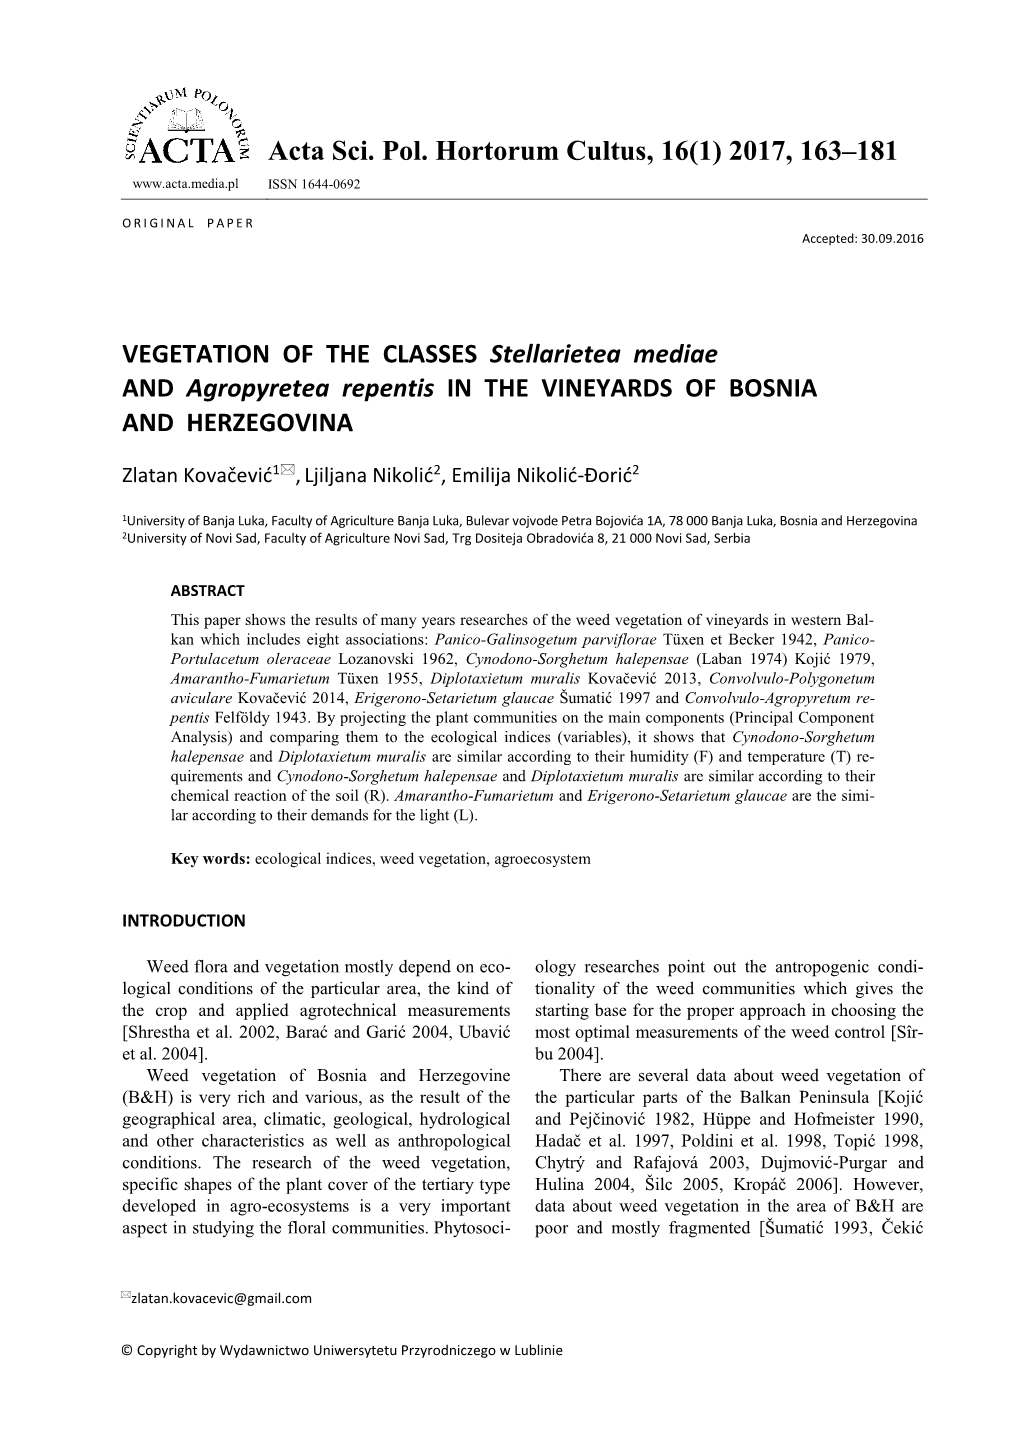 VEGETATION of the CLASSES Stellarietea Mediae and Agropyretea Repentis in the VINEYARDS of BOSNIA and HERZEGOVINA